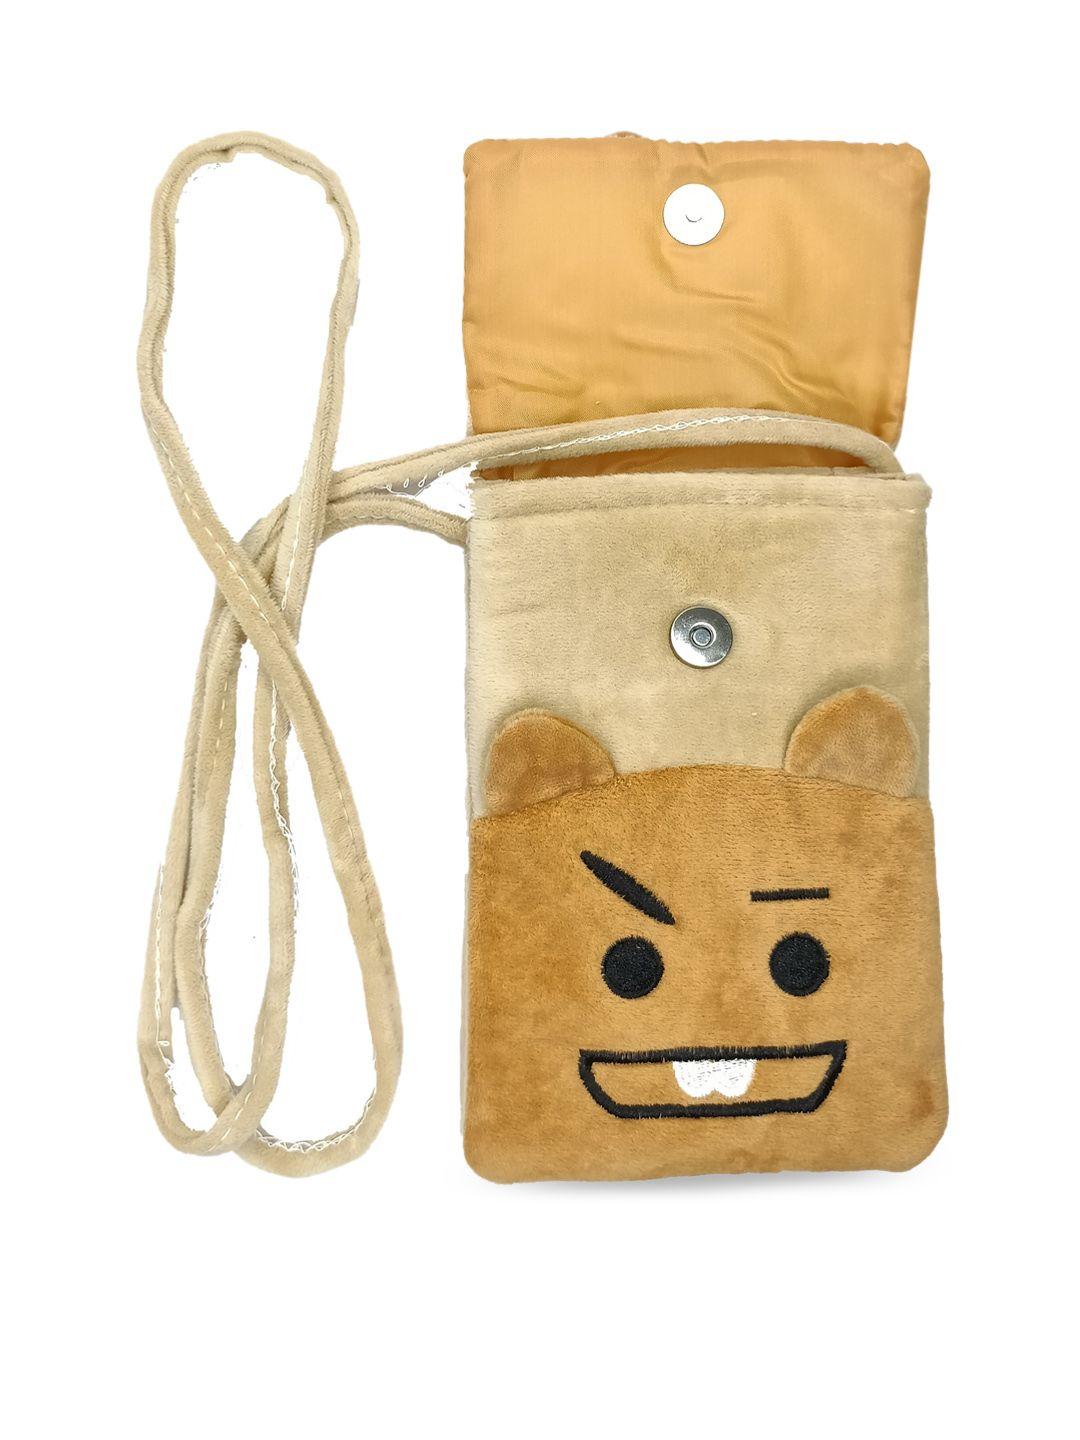 imars shopper sling bag with bow detail